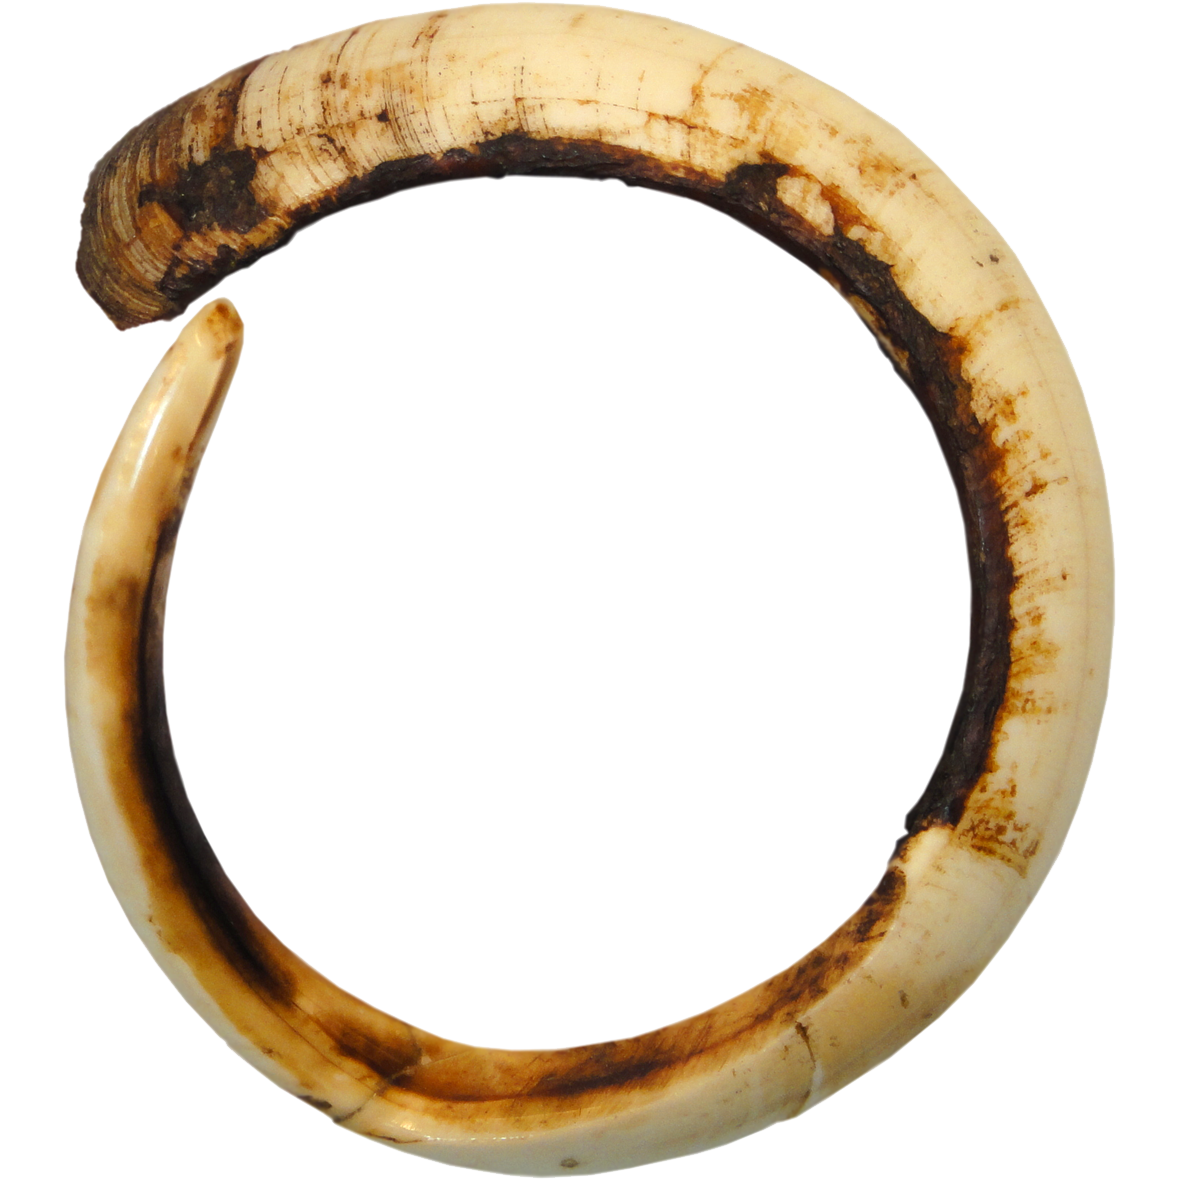 Papua New Guinea, North-East Coast, Full Circle Boar Tusk (restored) (reverse)